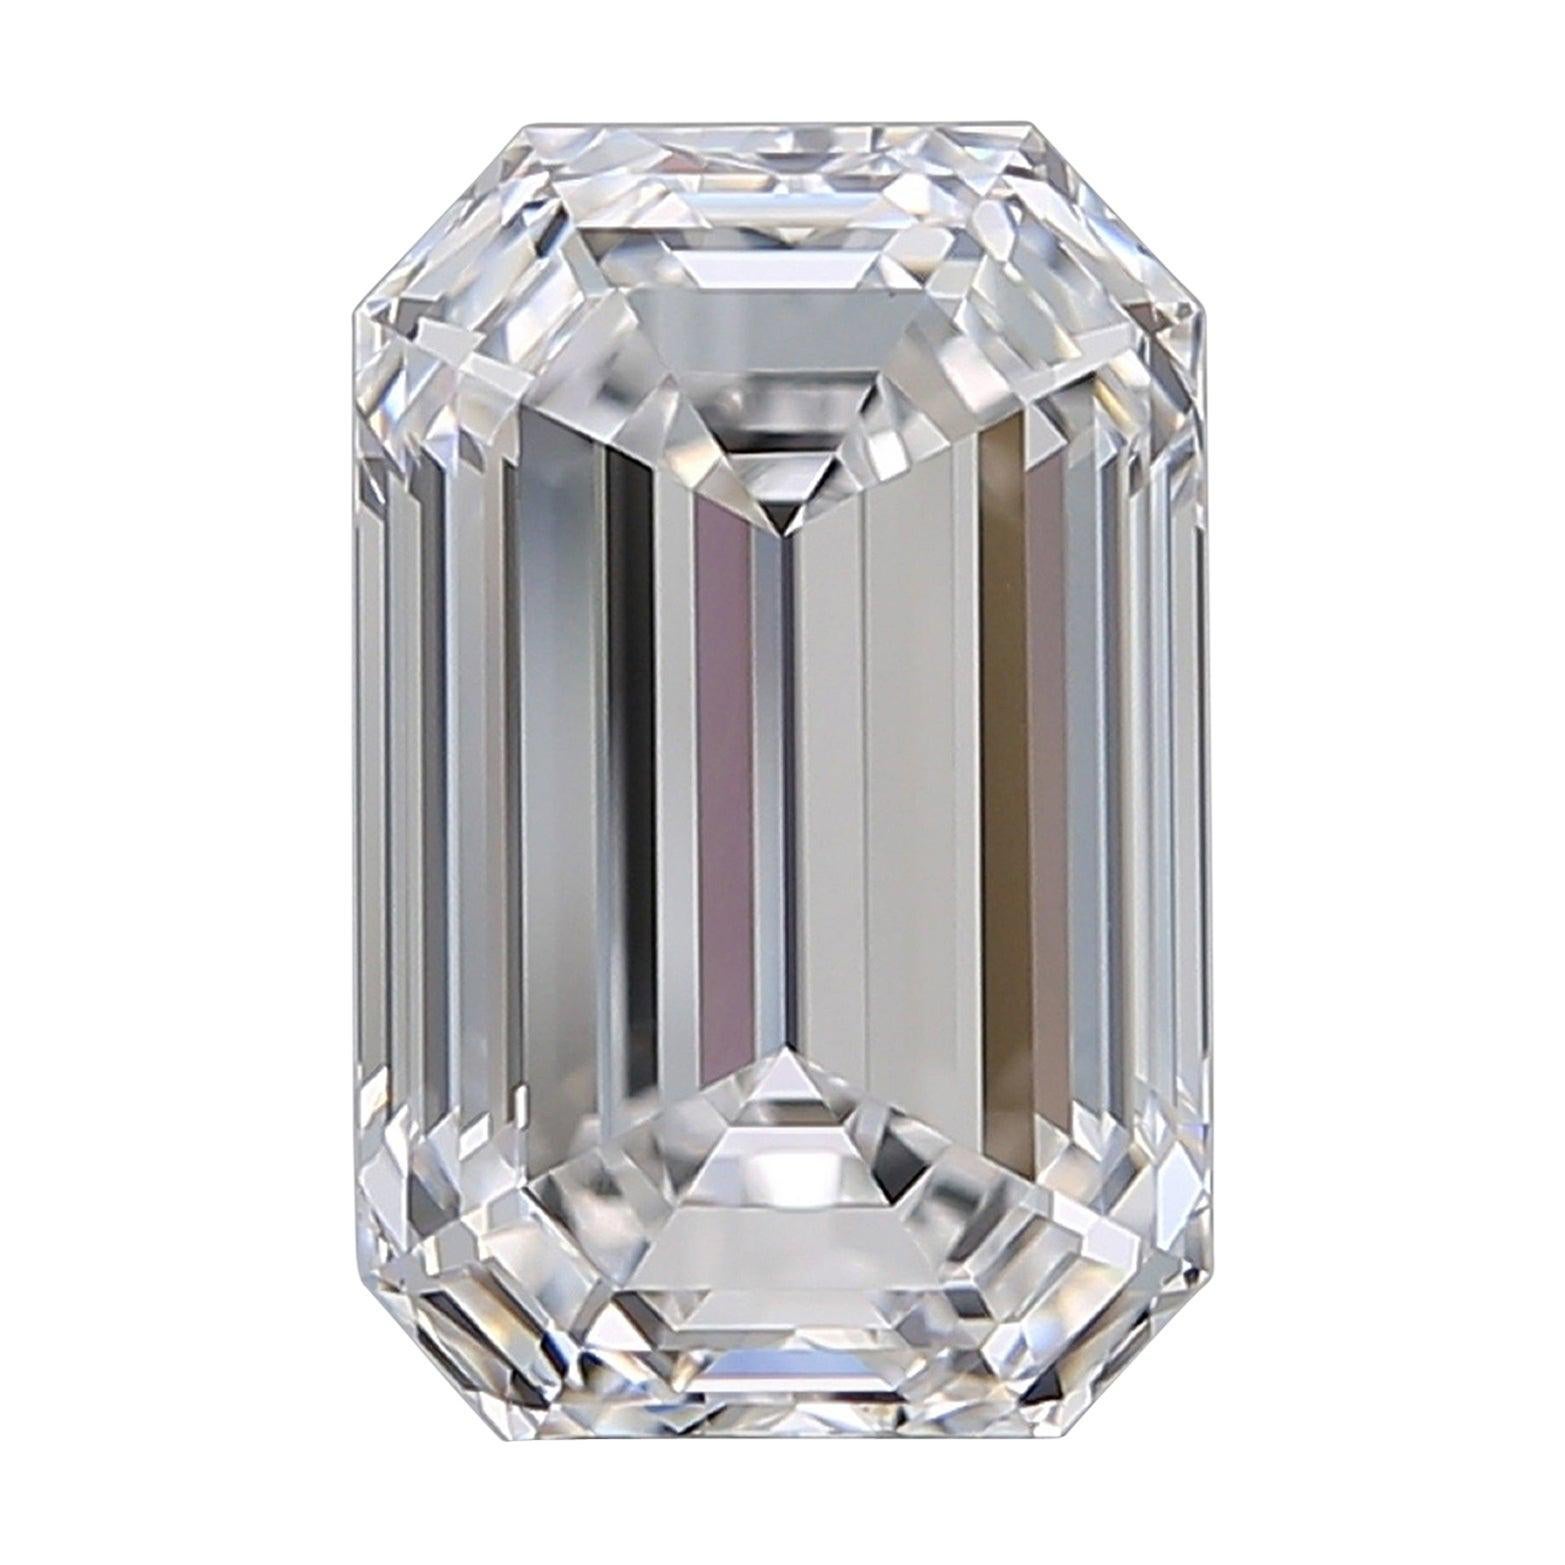 Flawless D Color GIA Certified 4 Carat Emerald Cut Diamond